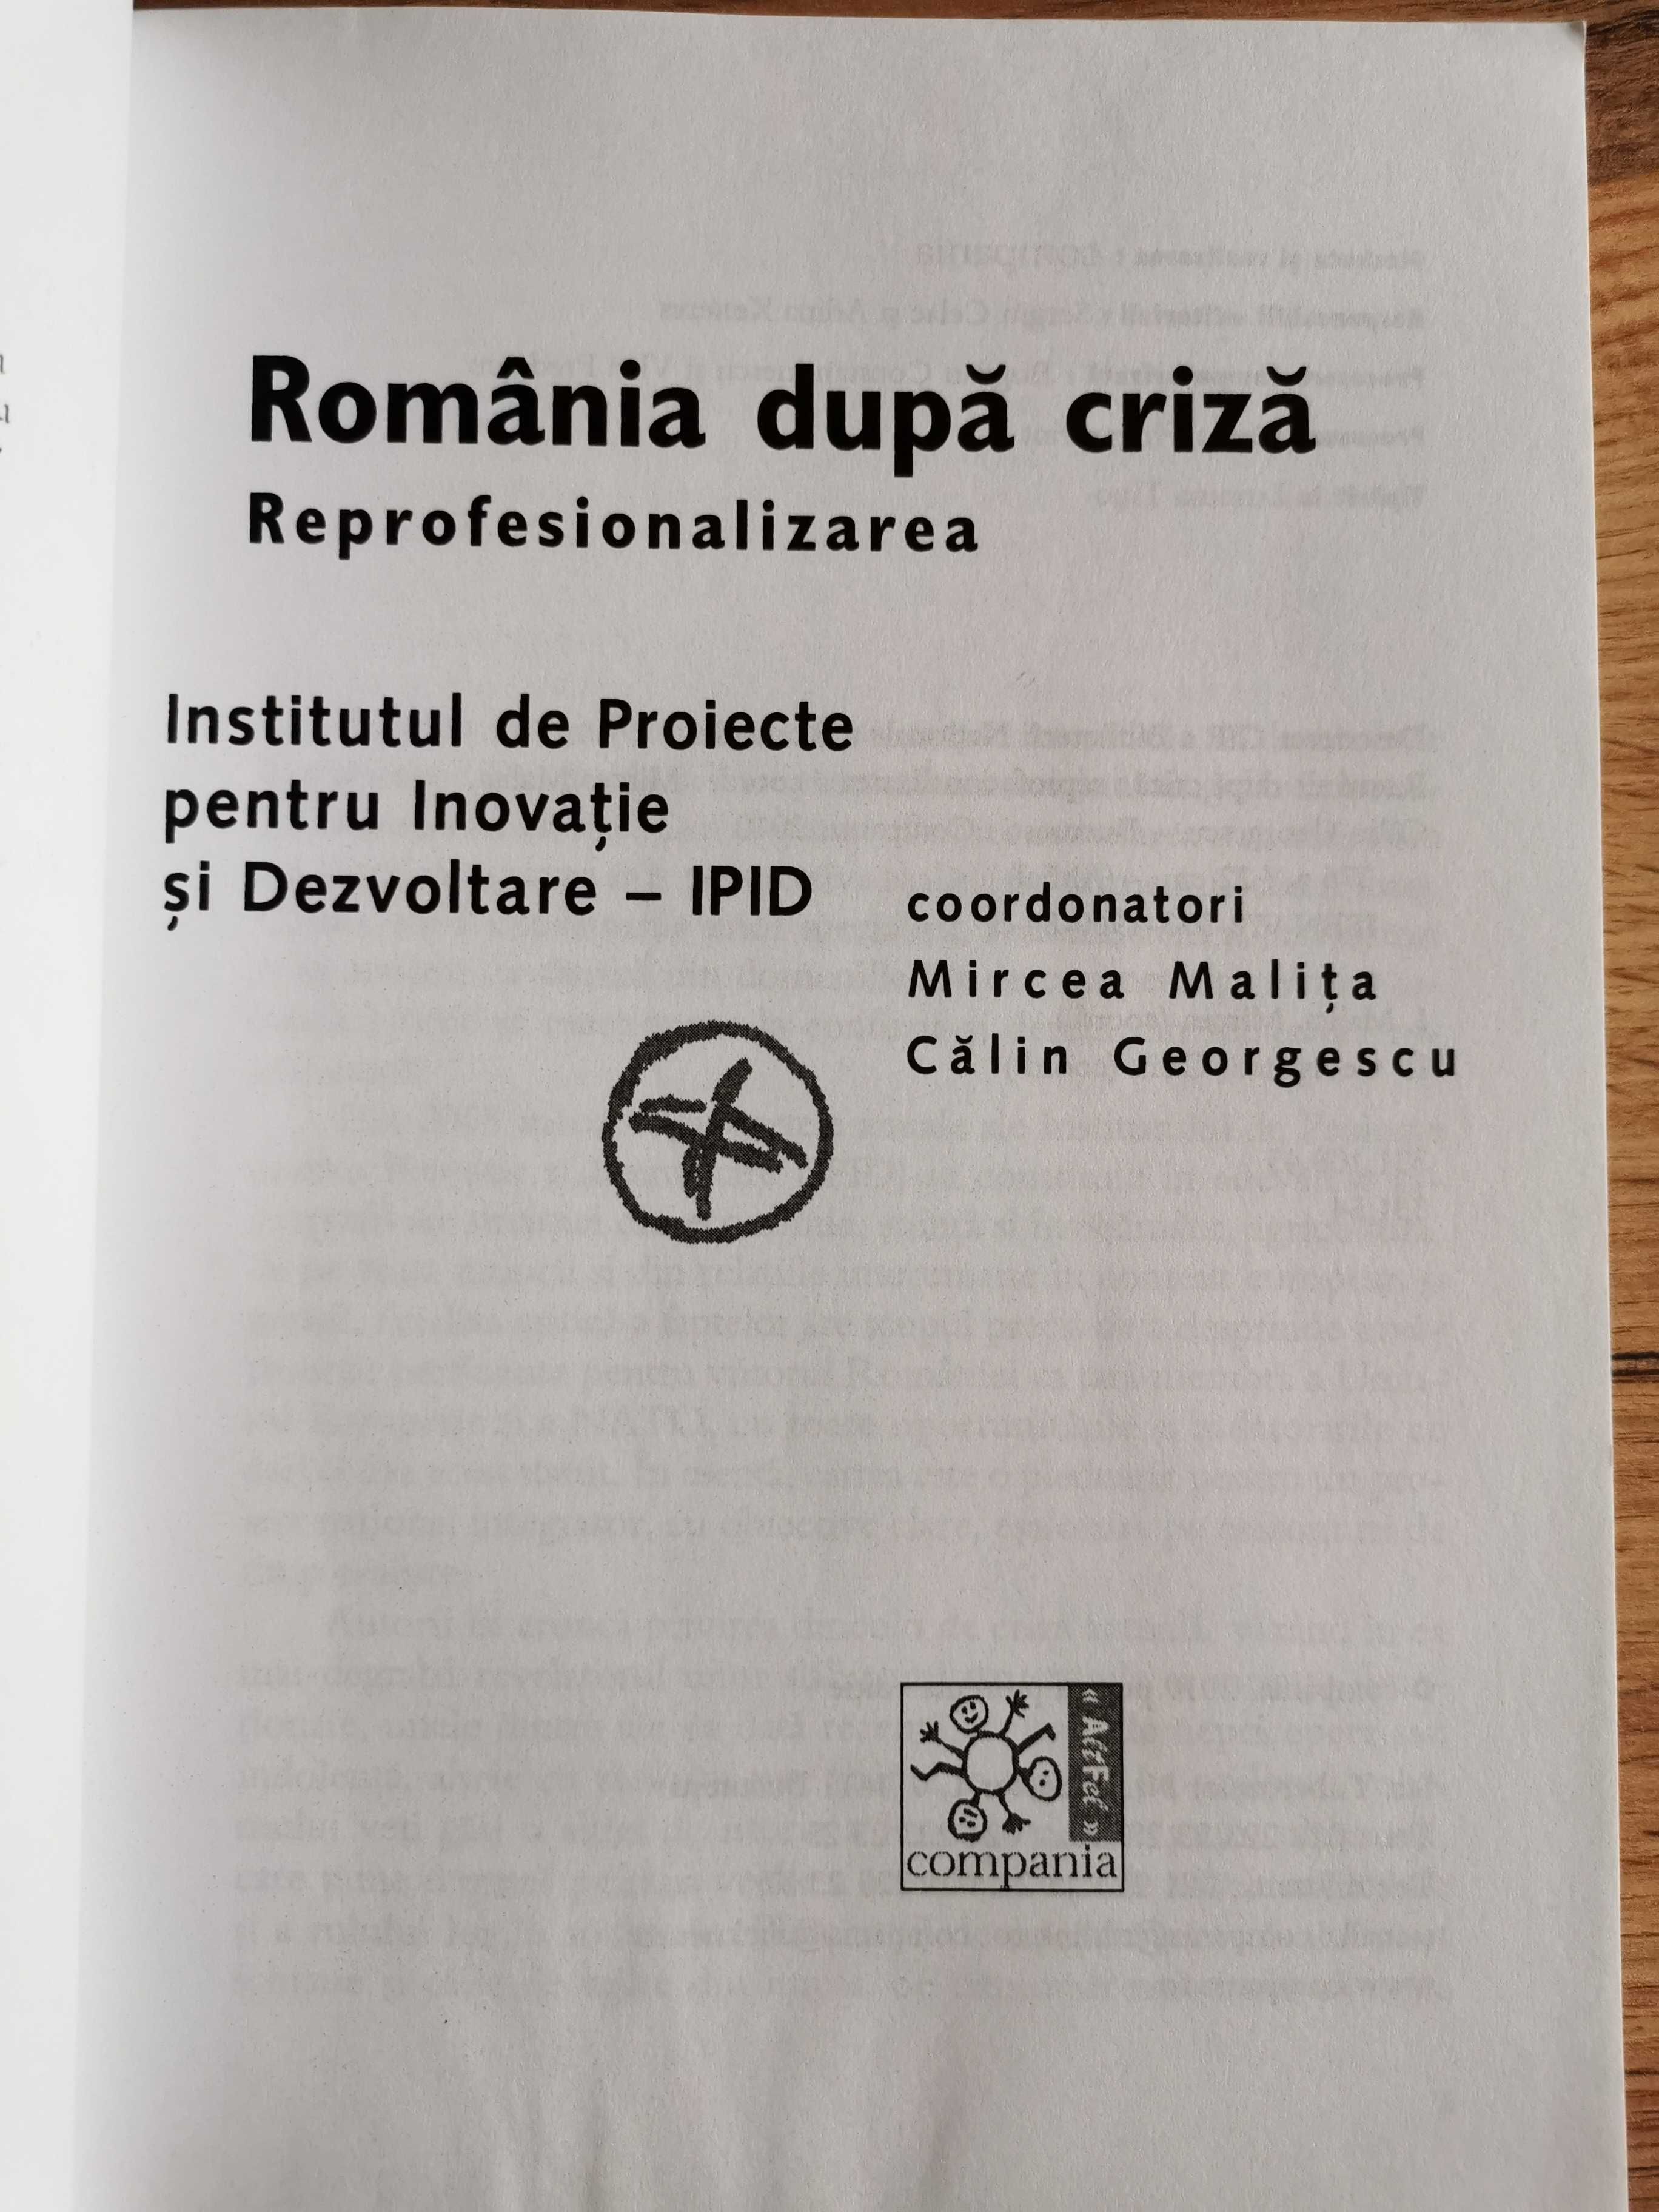 Romania dupa criza. Reprofesionalizarea Mircea Malita, Calin Georgescu